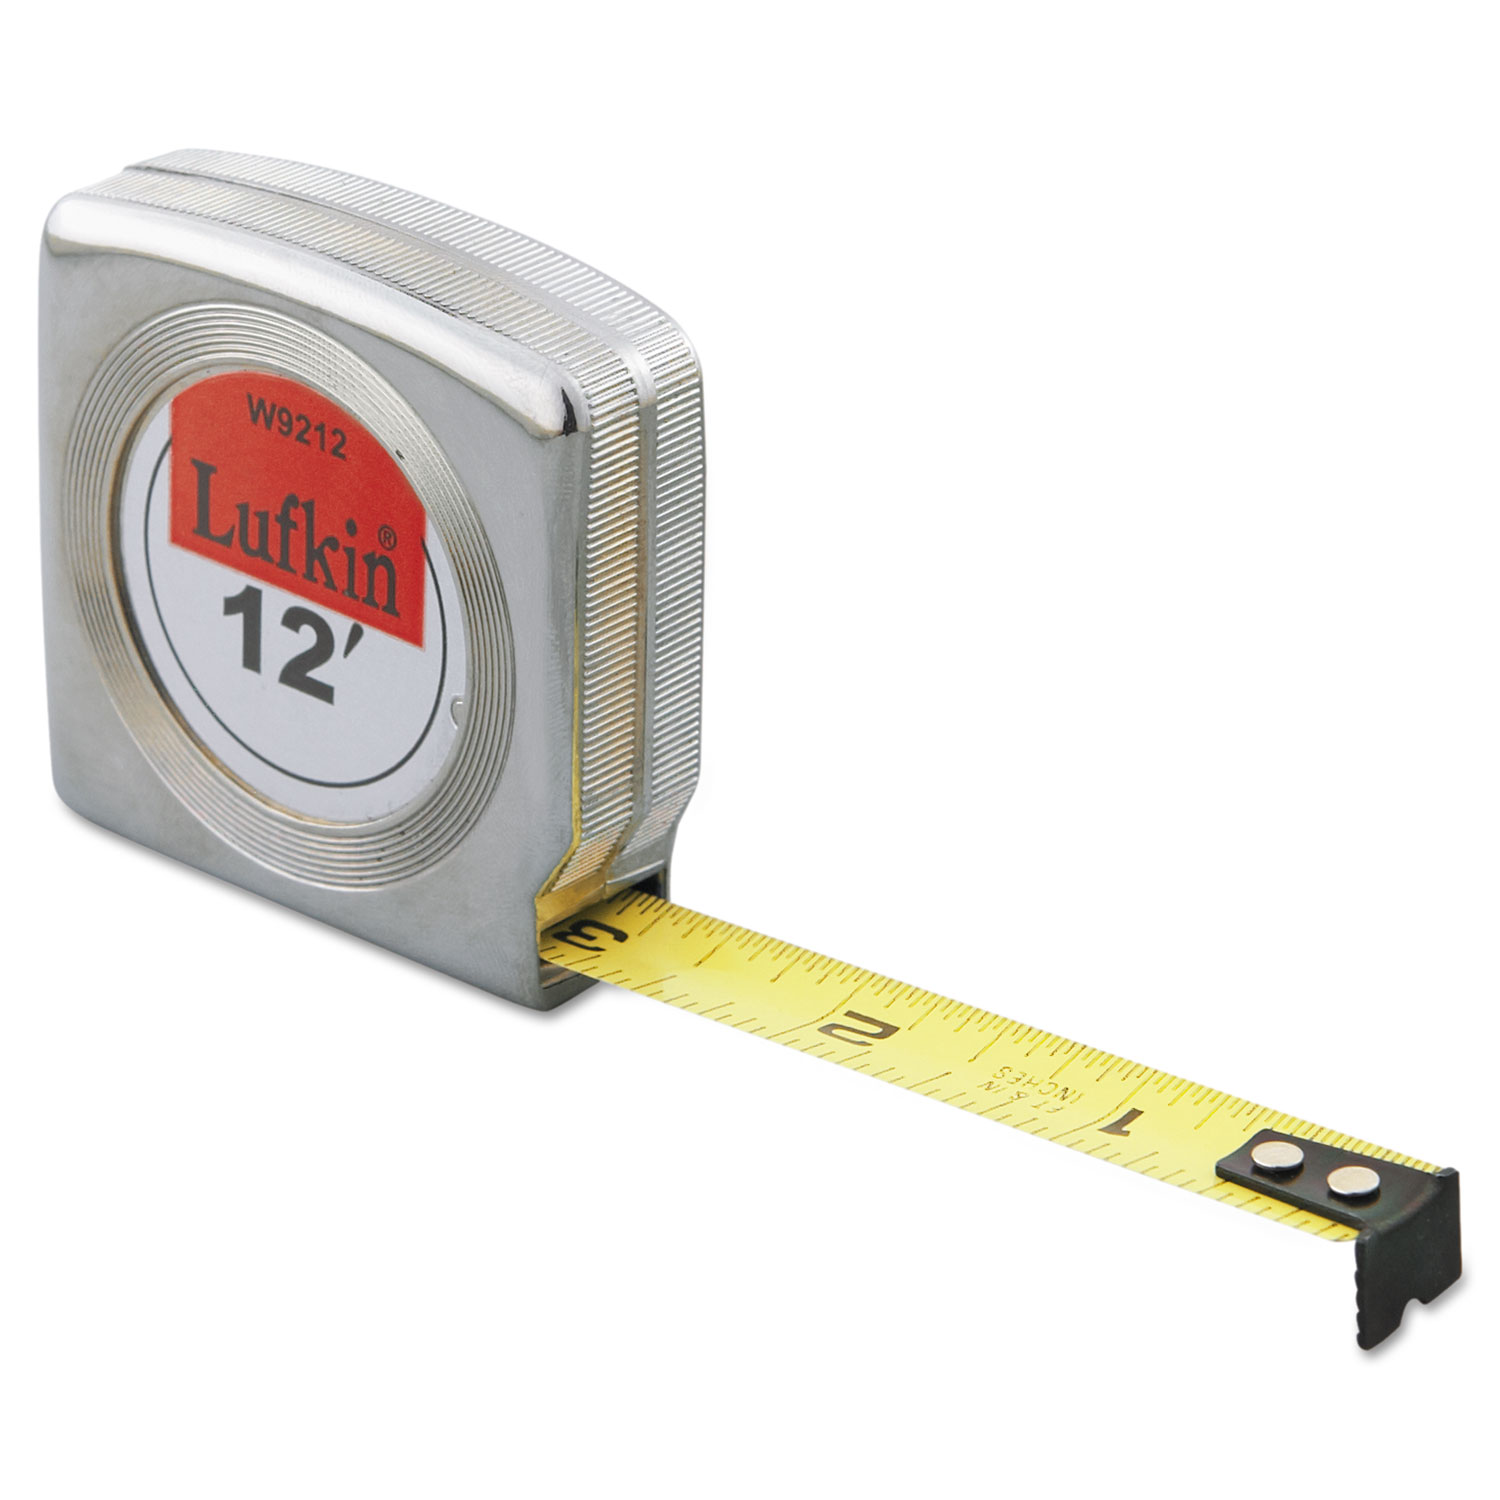 Mezurall Measuring Tape, 1/2in x 12ft, Yellow